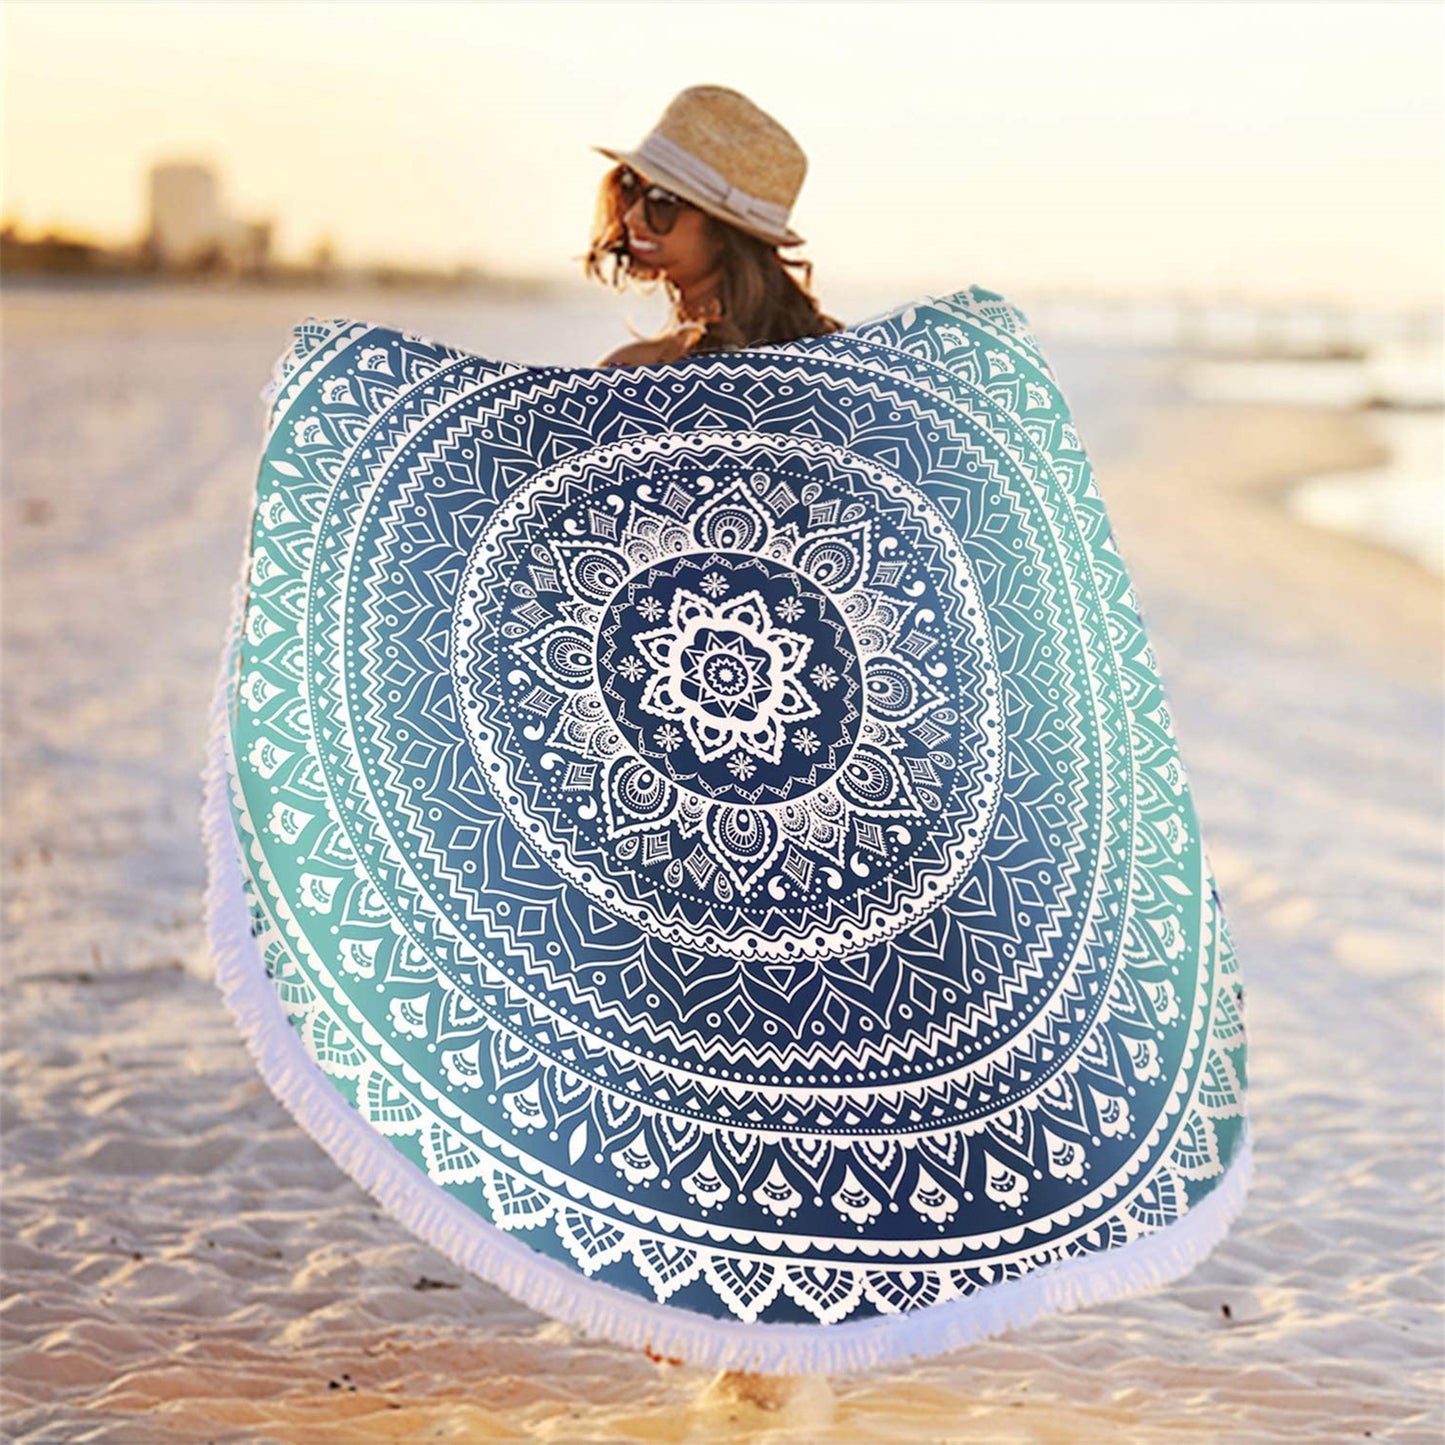 59 Inches Round Microfiber Beach Towel Blanket for Yoga, Beach, Picnic, and Mandala Decor